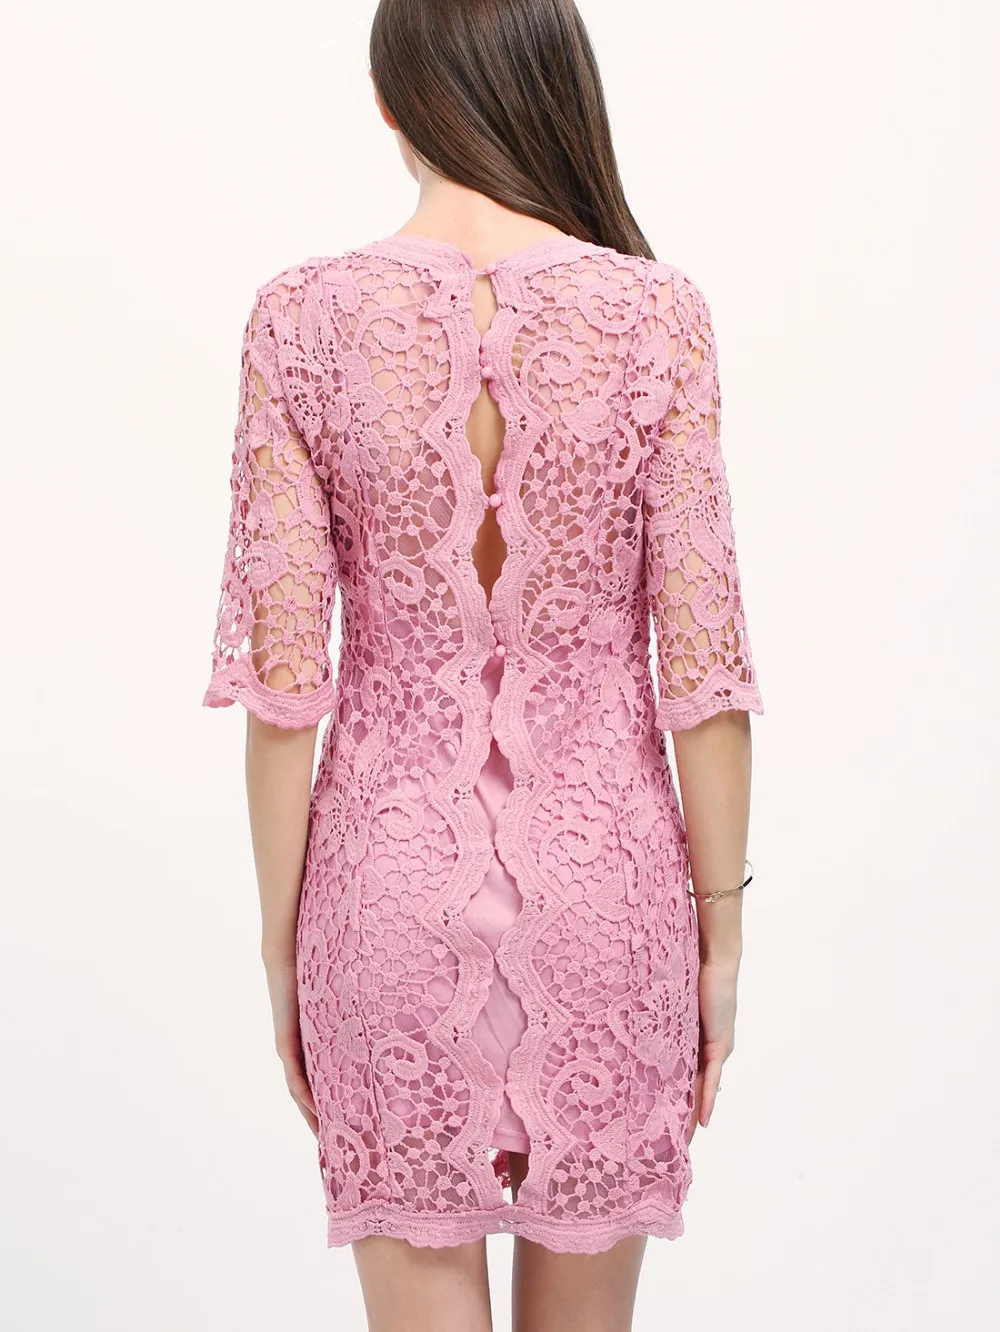 Ecoach New Design Lace Evening Dress Elegant 3/4 Sleeve Purple Button ...